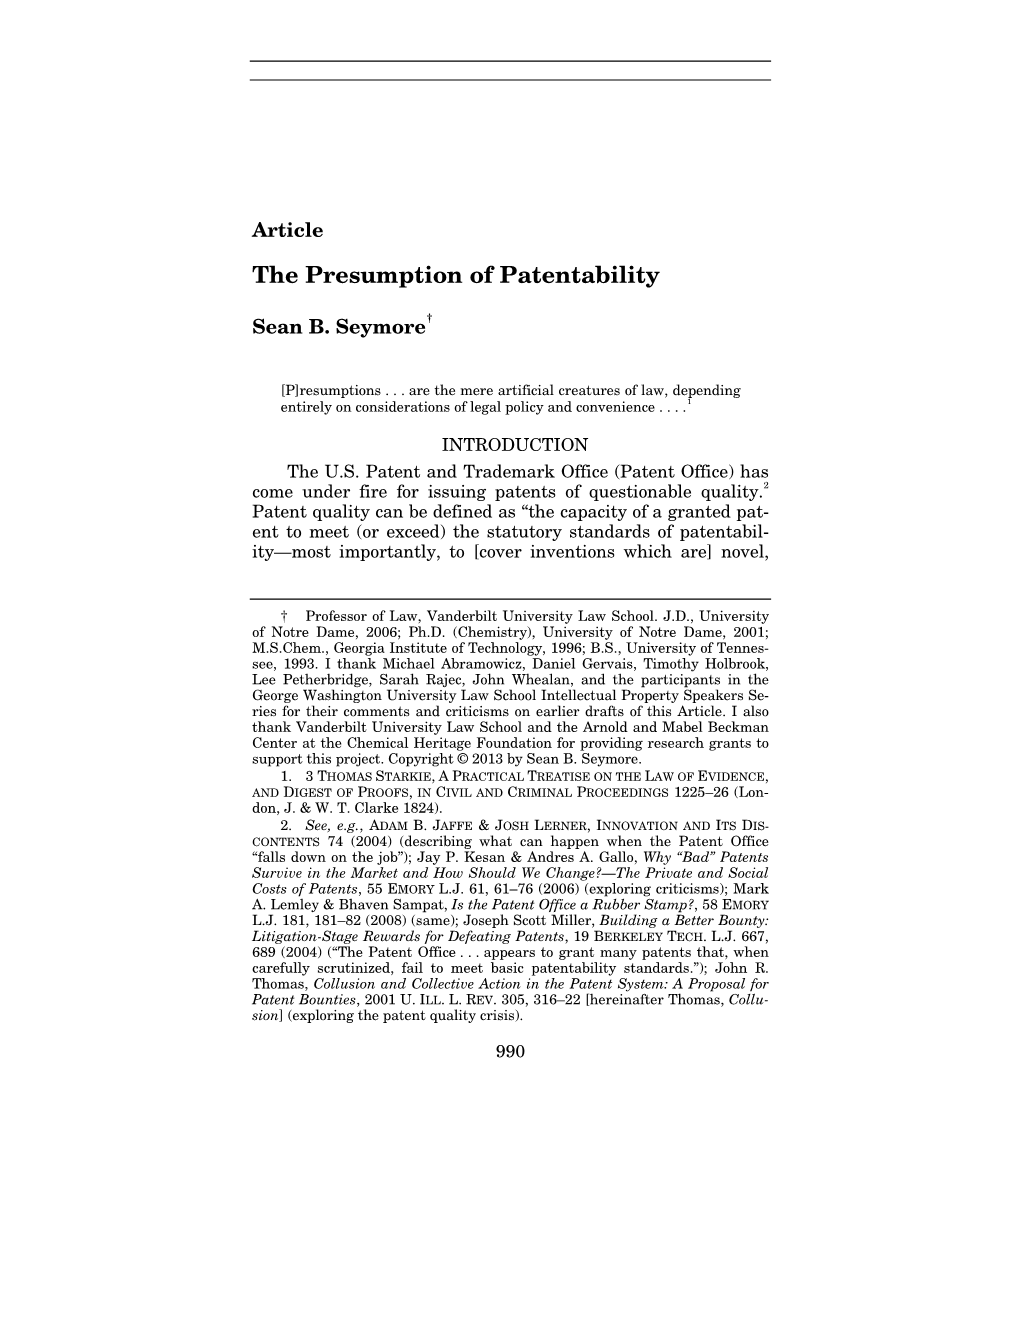 The Presumption of Patentability